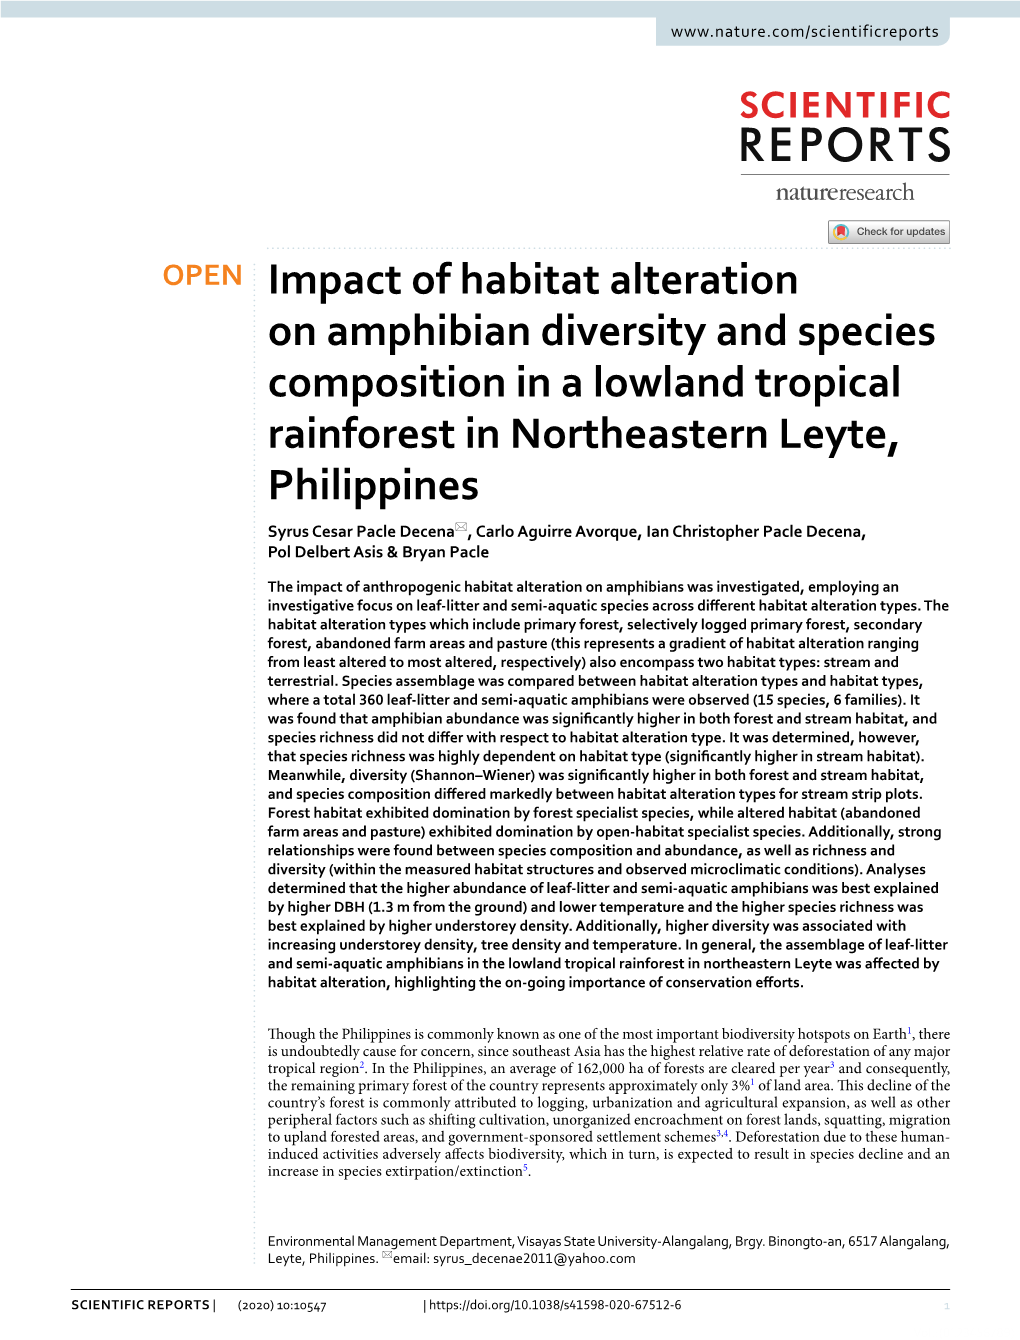 Impact of Habitat Alteration on Amphibian Diversity and Species